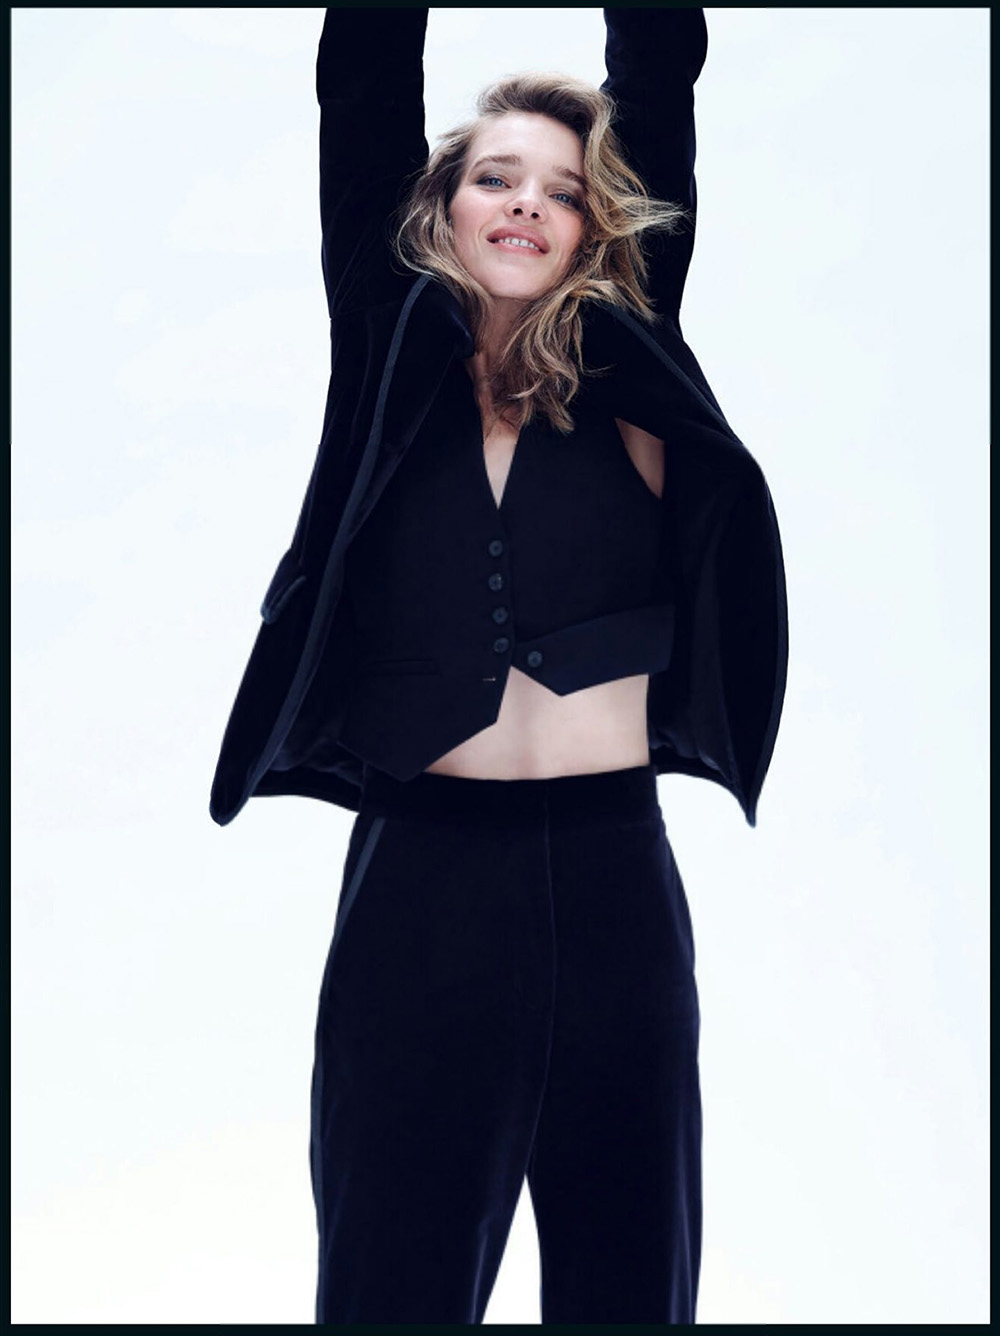 Natalia Vodianova covers Vogue Paris August 2020 by Nathaniel Goldberg